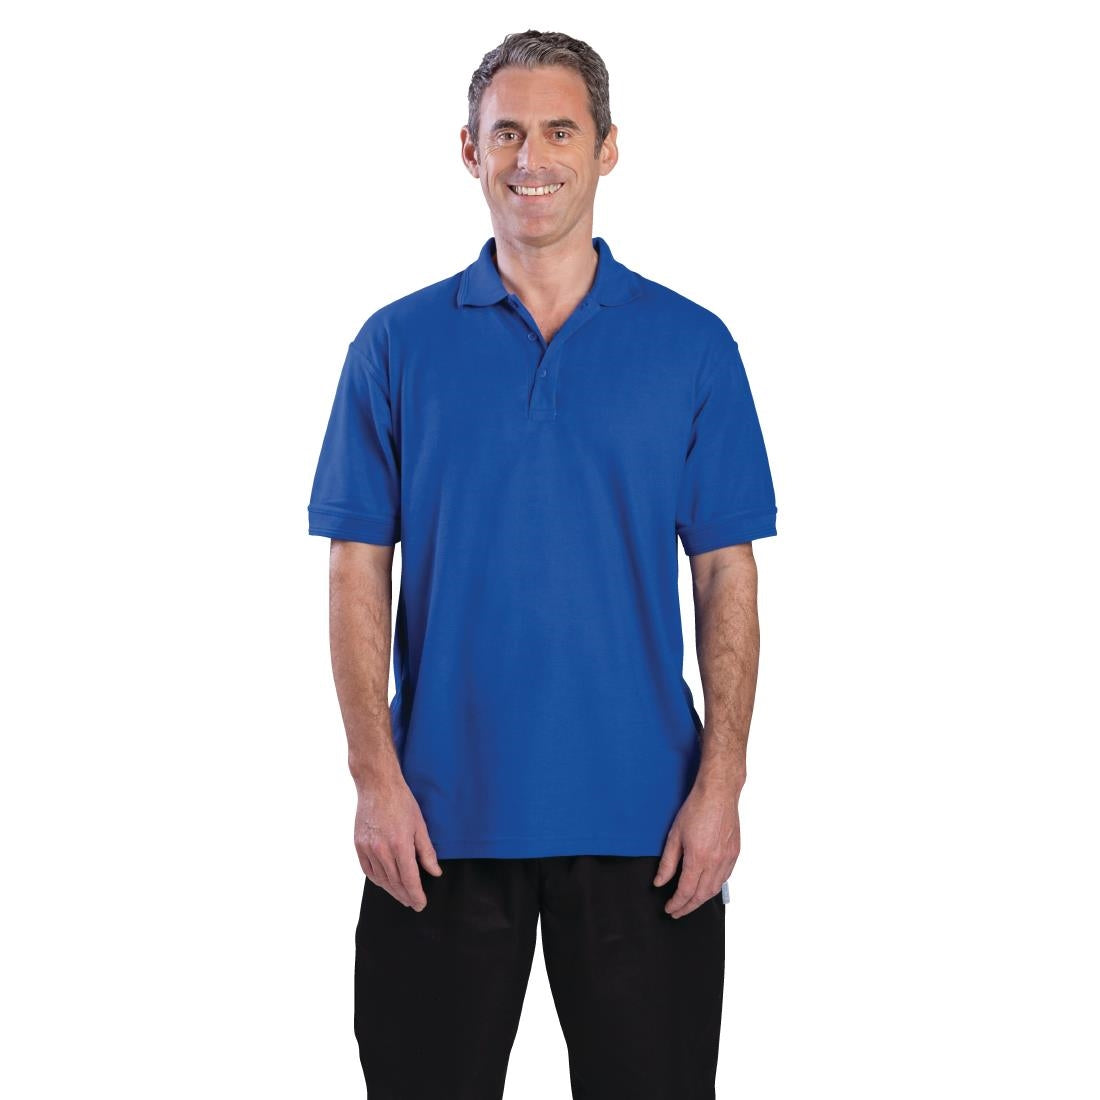 A763-L Unisex Polo Shirt Royal Blue L JD Catering Equipment Solutions Ltd